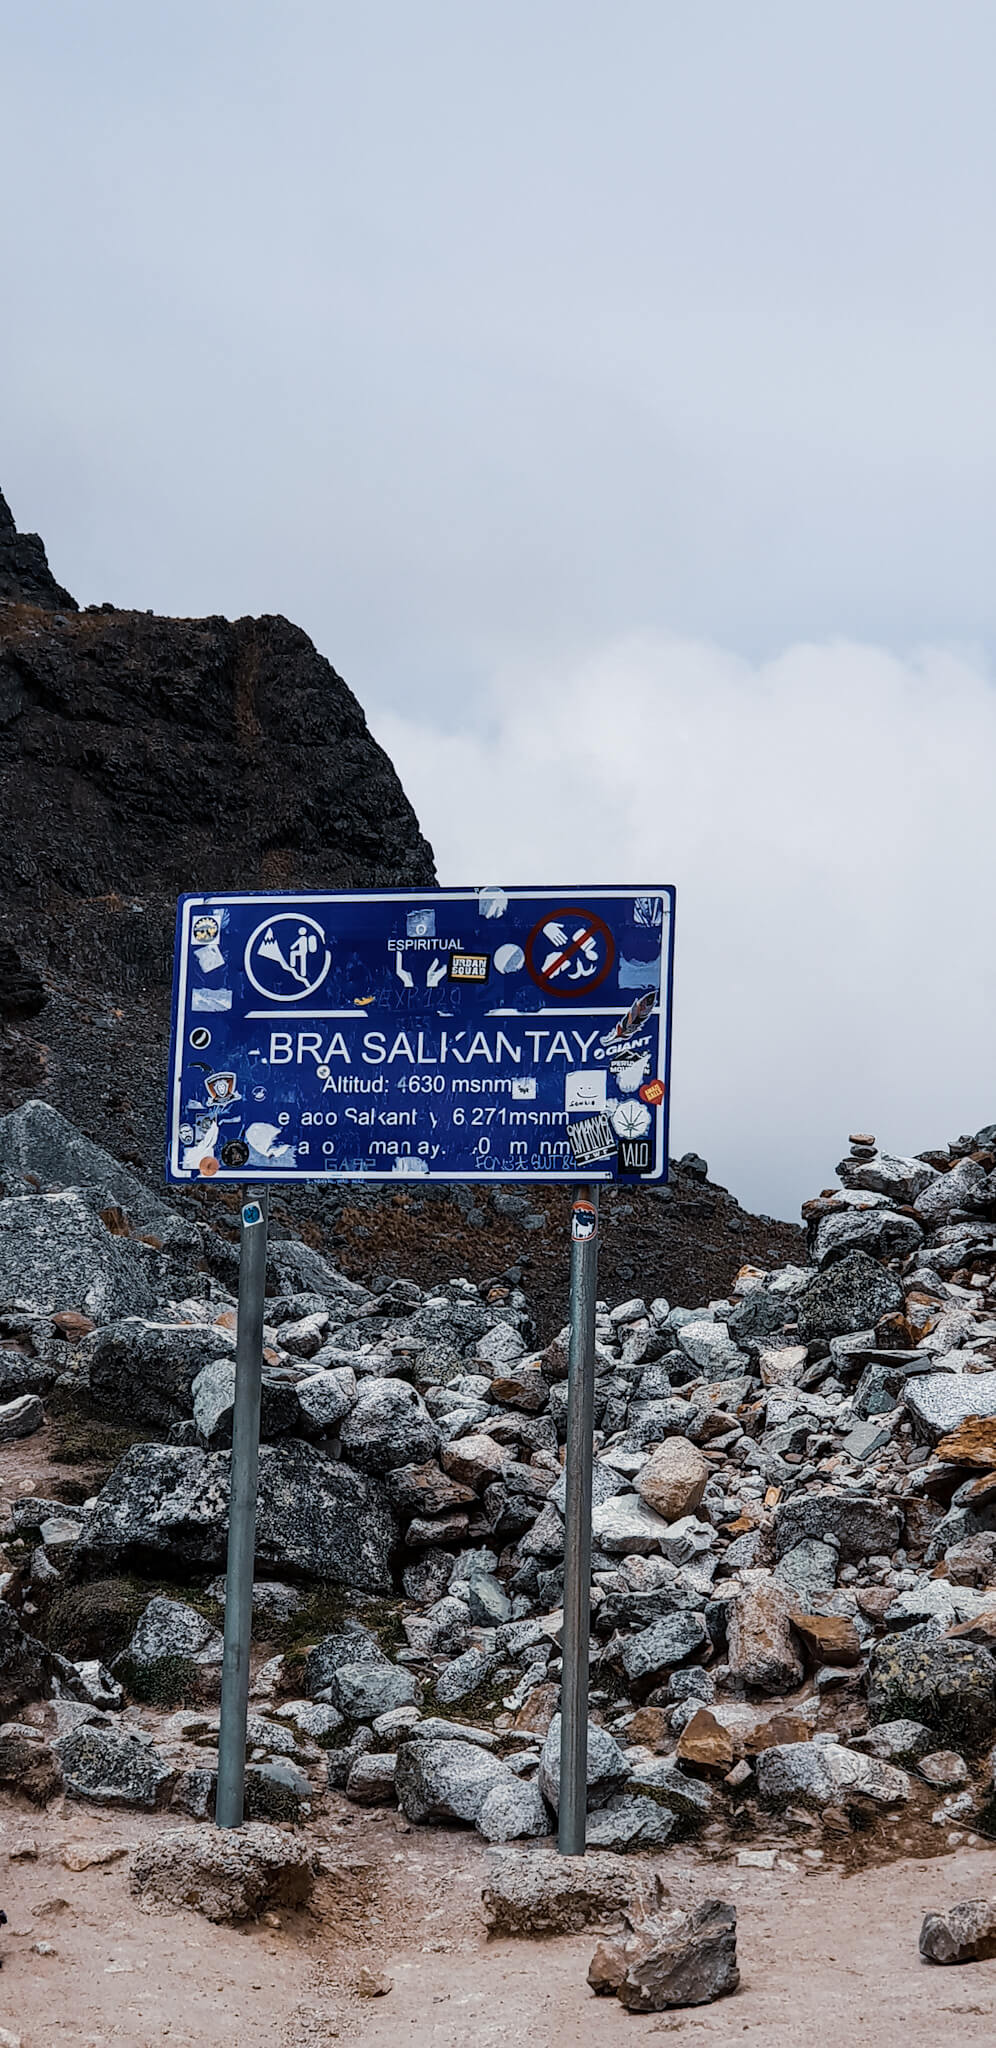 Salkantay Mountain Peak